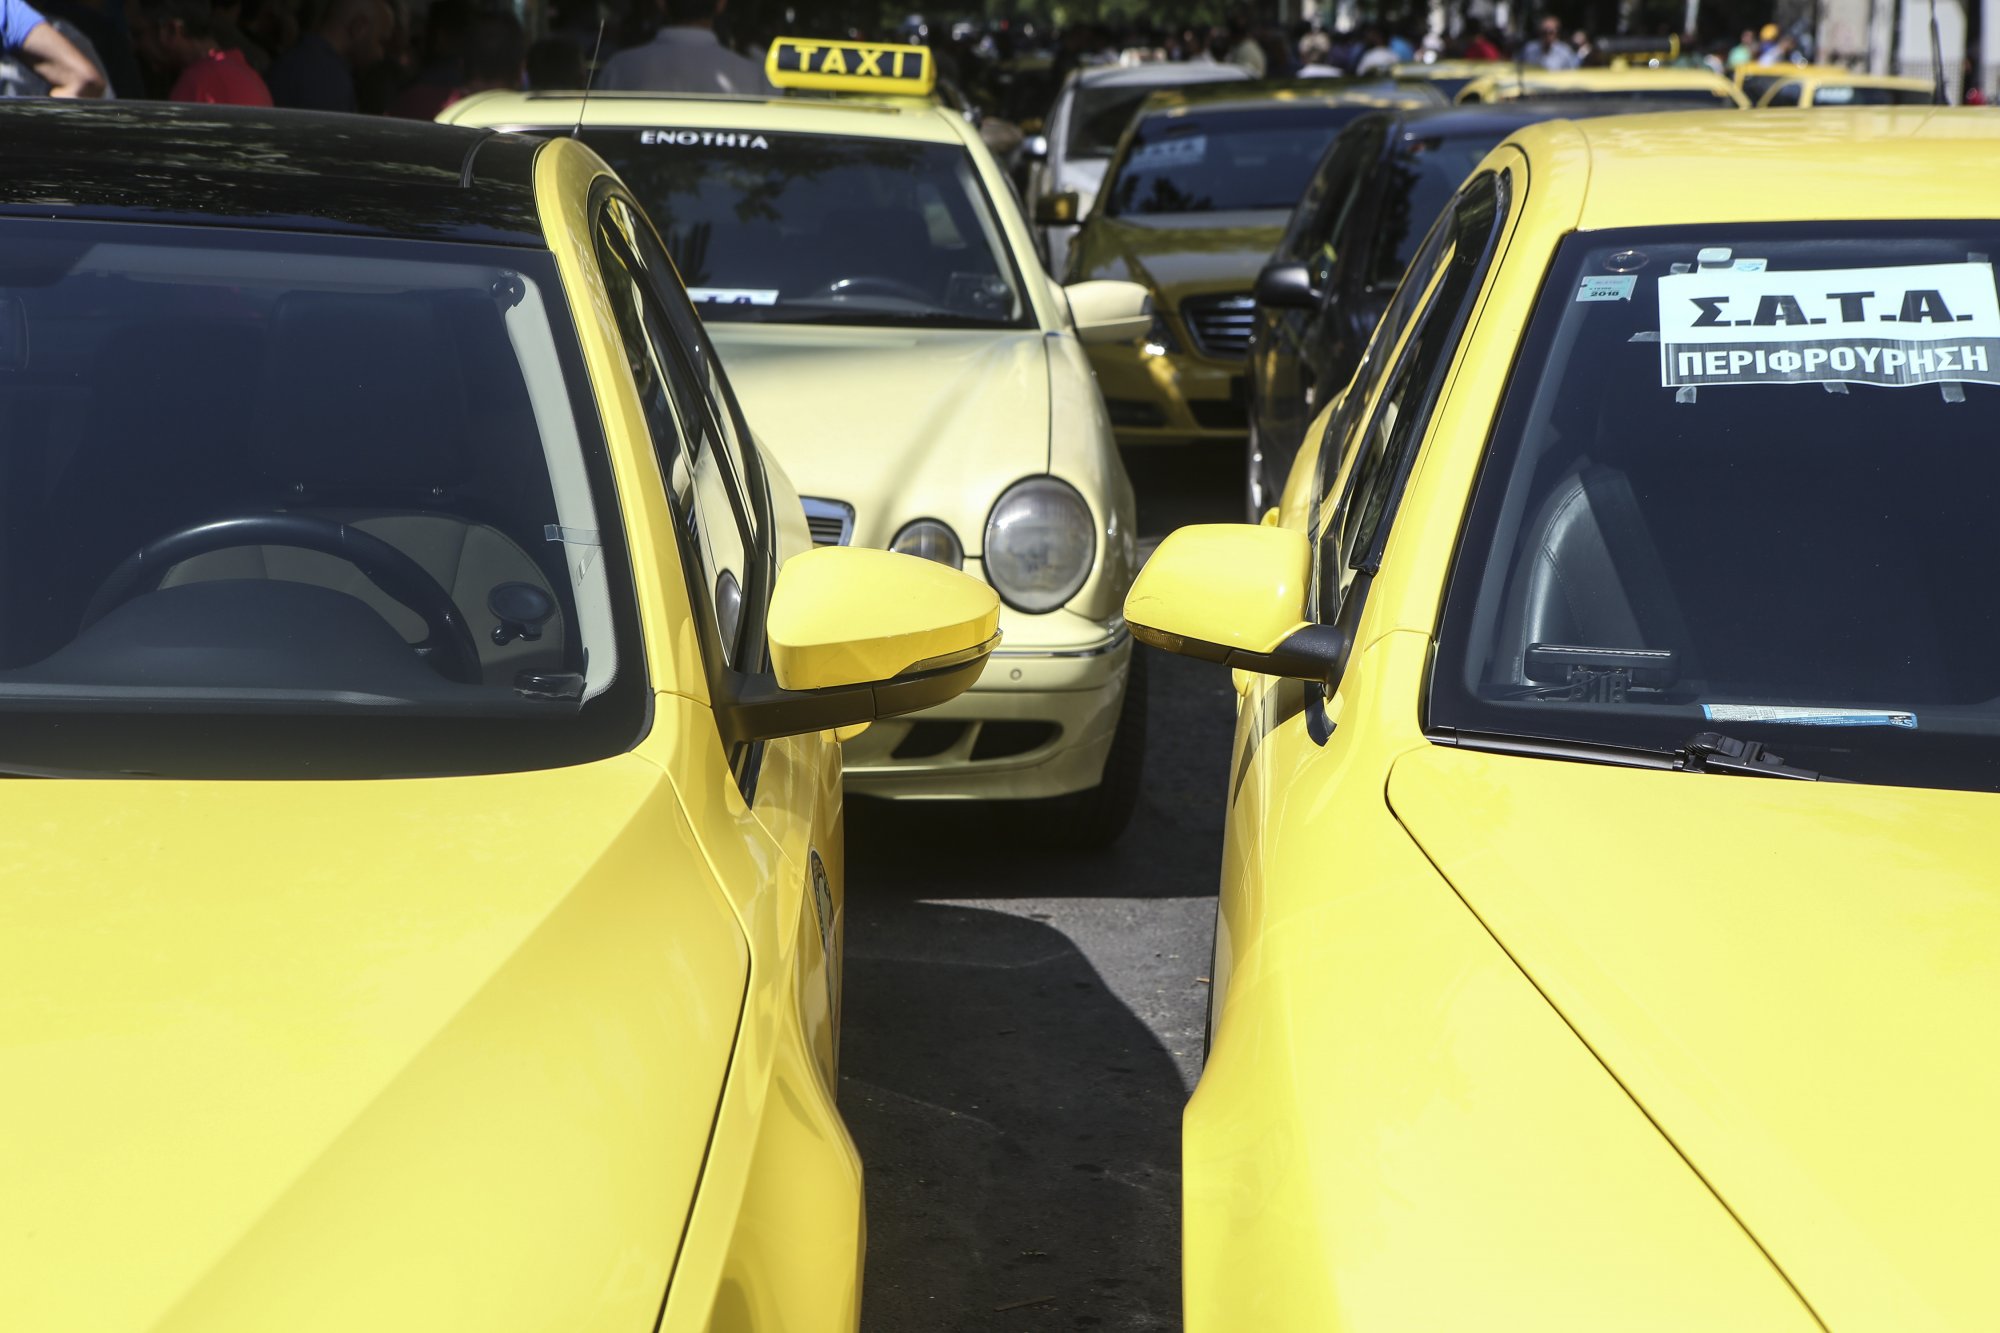 Financial Times: Οι «γκρινιάρηδες» Έλληνες ταξιτζήδες, τα POS και η μάχη κατά της φοροδιαφυγής